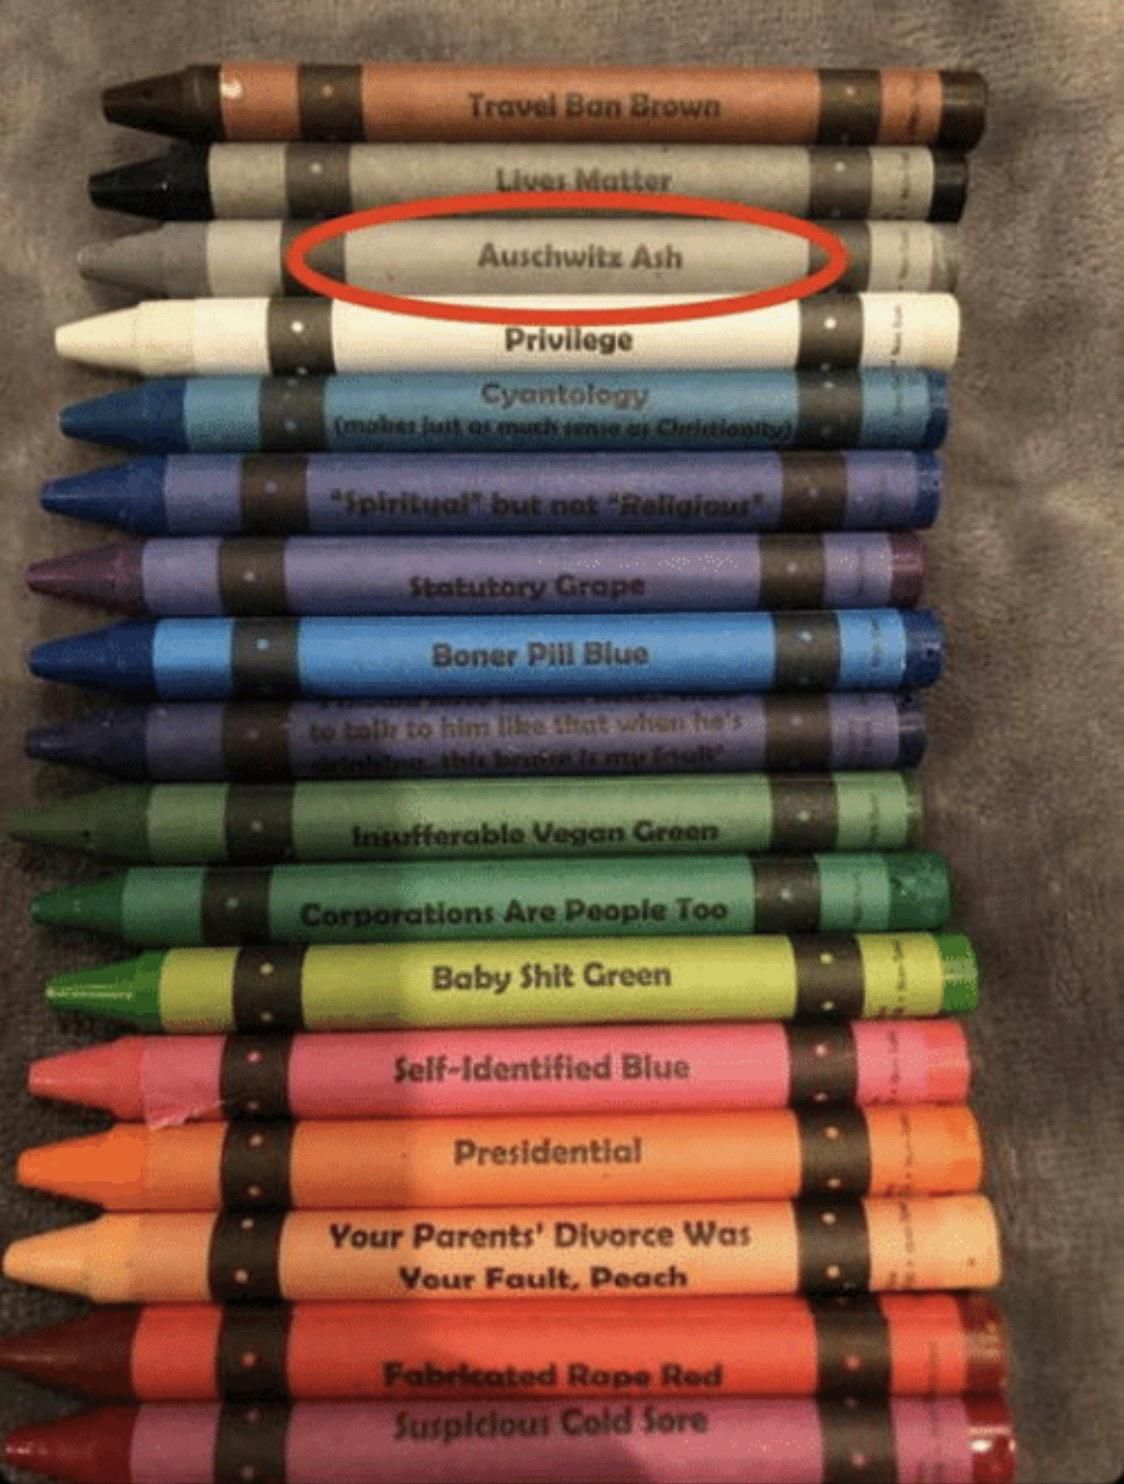 Interesting crayon set